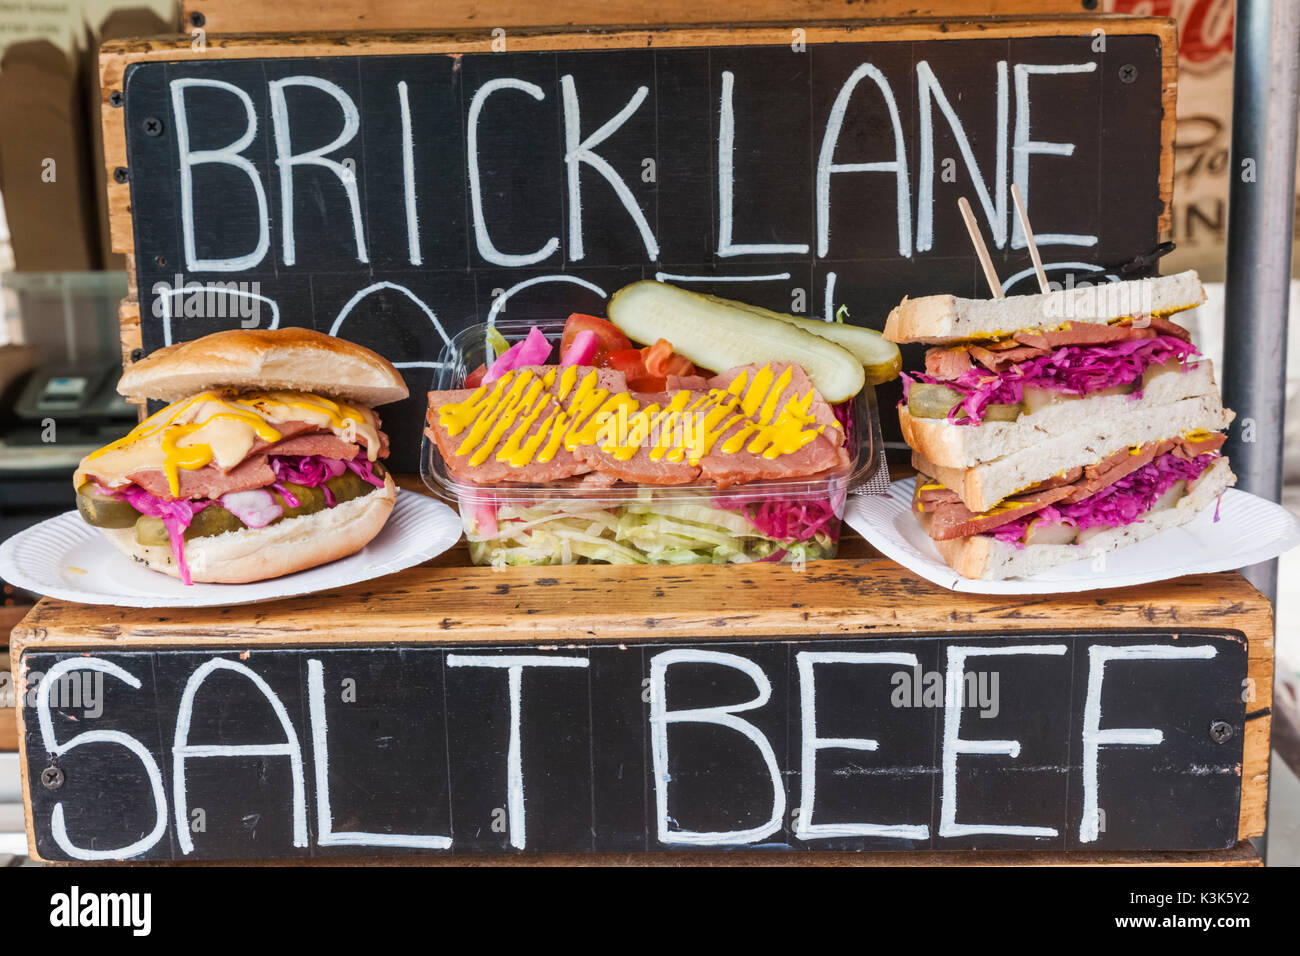 England, London, Shoreditch, Brick Lane, Street Food Stall Display of Salt Beef Sandwiches Stock Photo